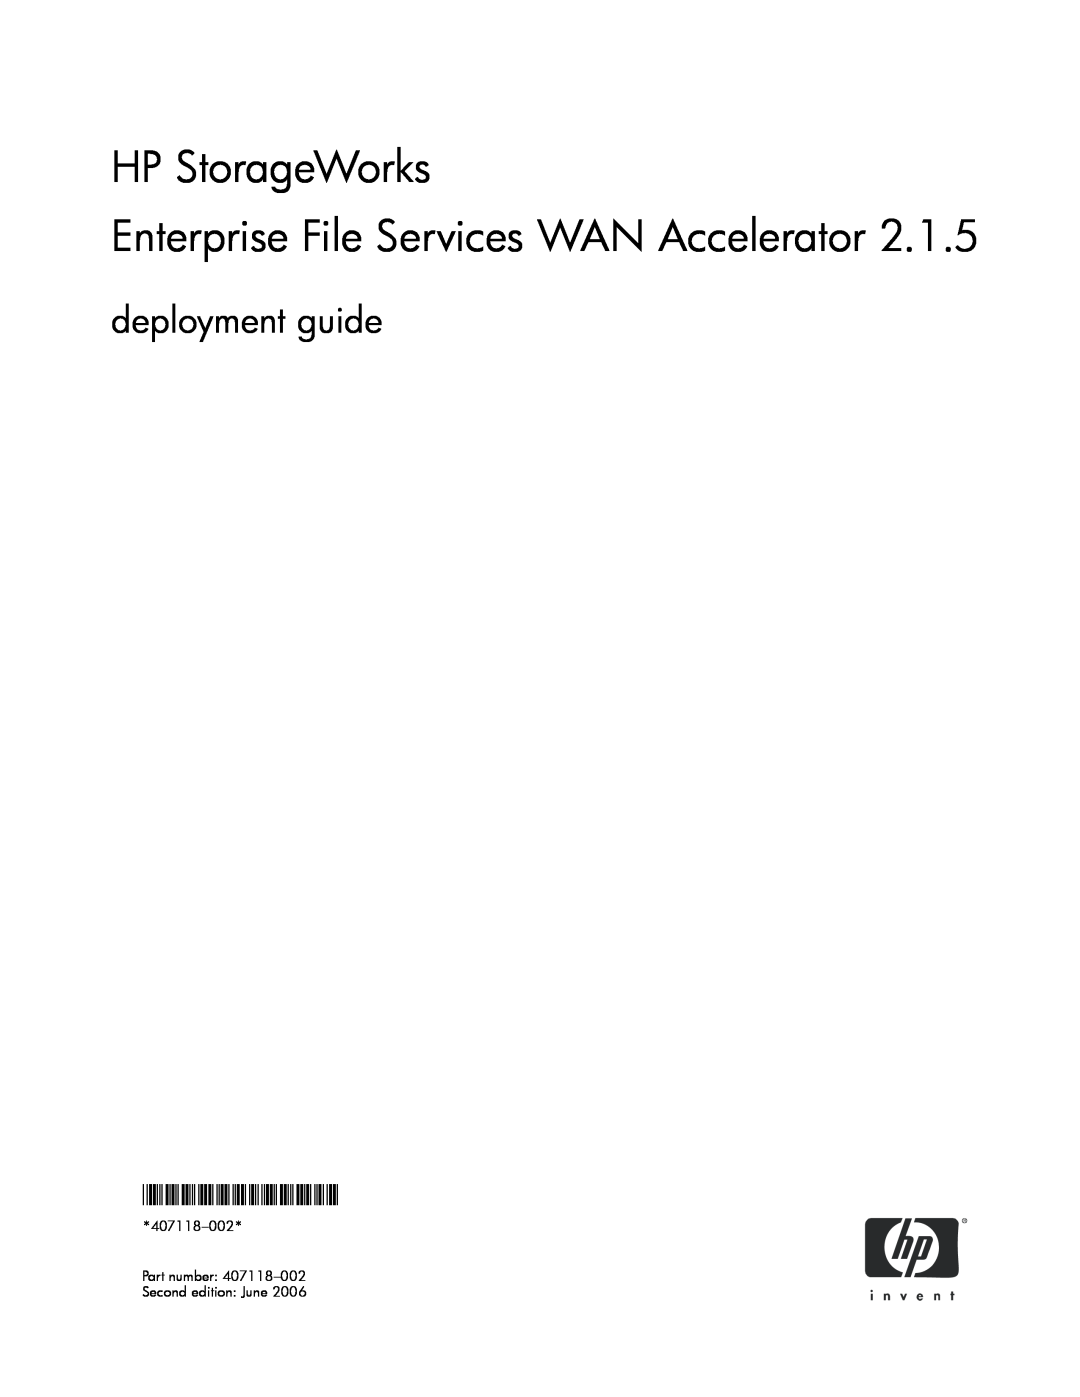 HP Enterprise File Services WAN Accelerator manual 393871-002, Dear Valued Customer 